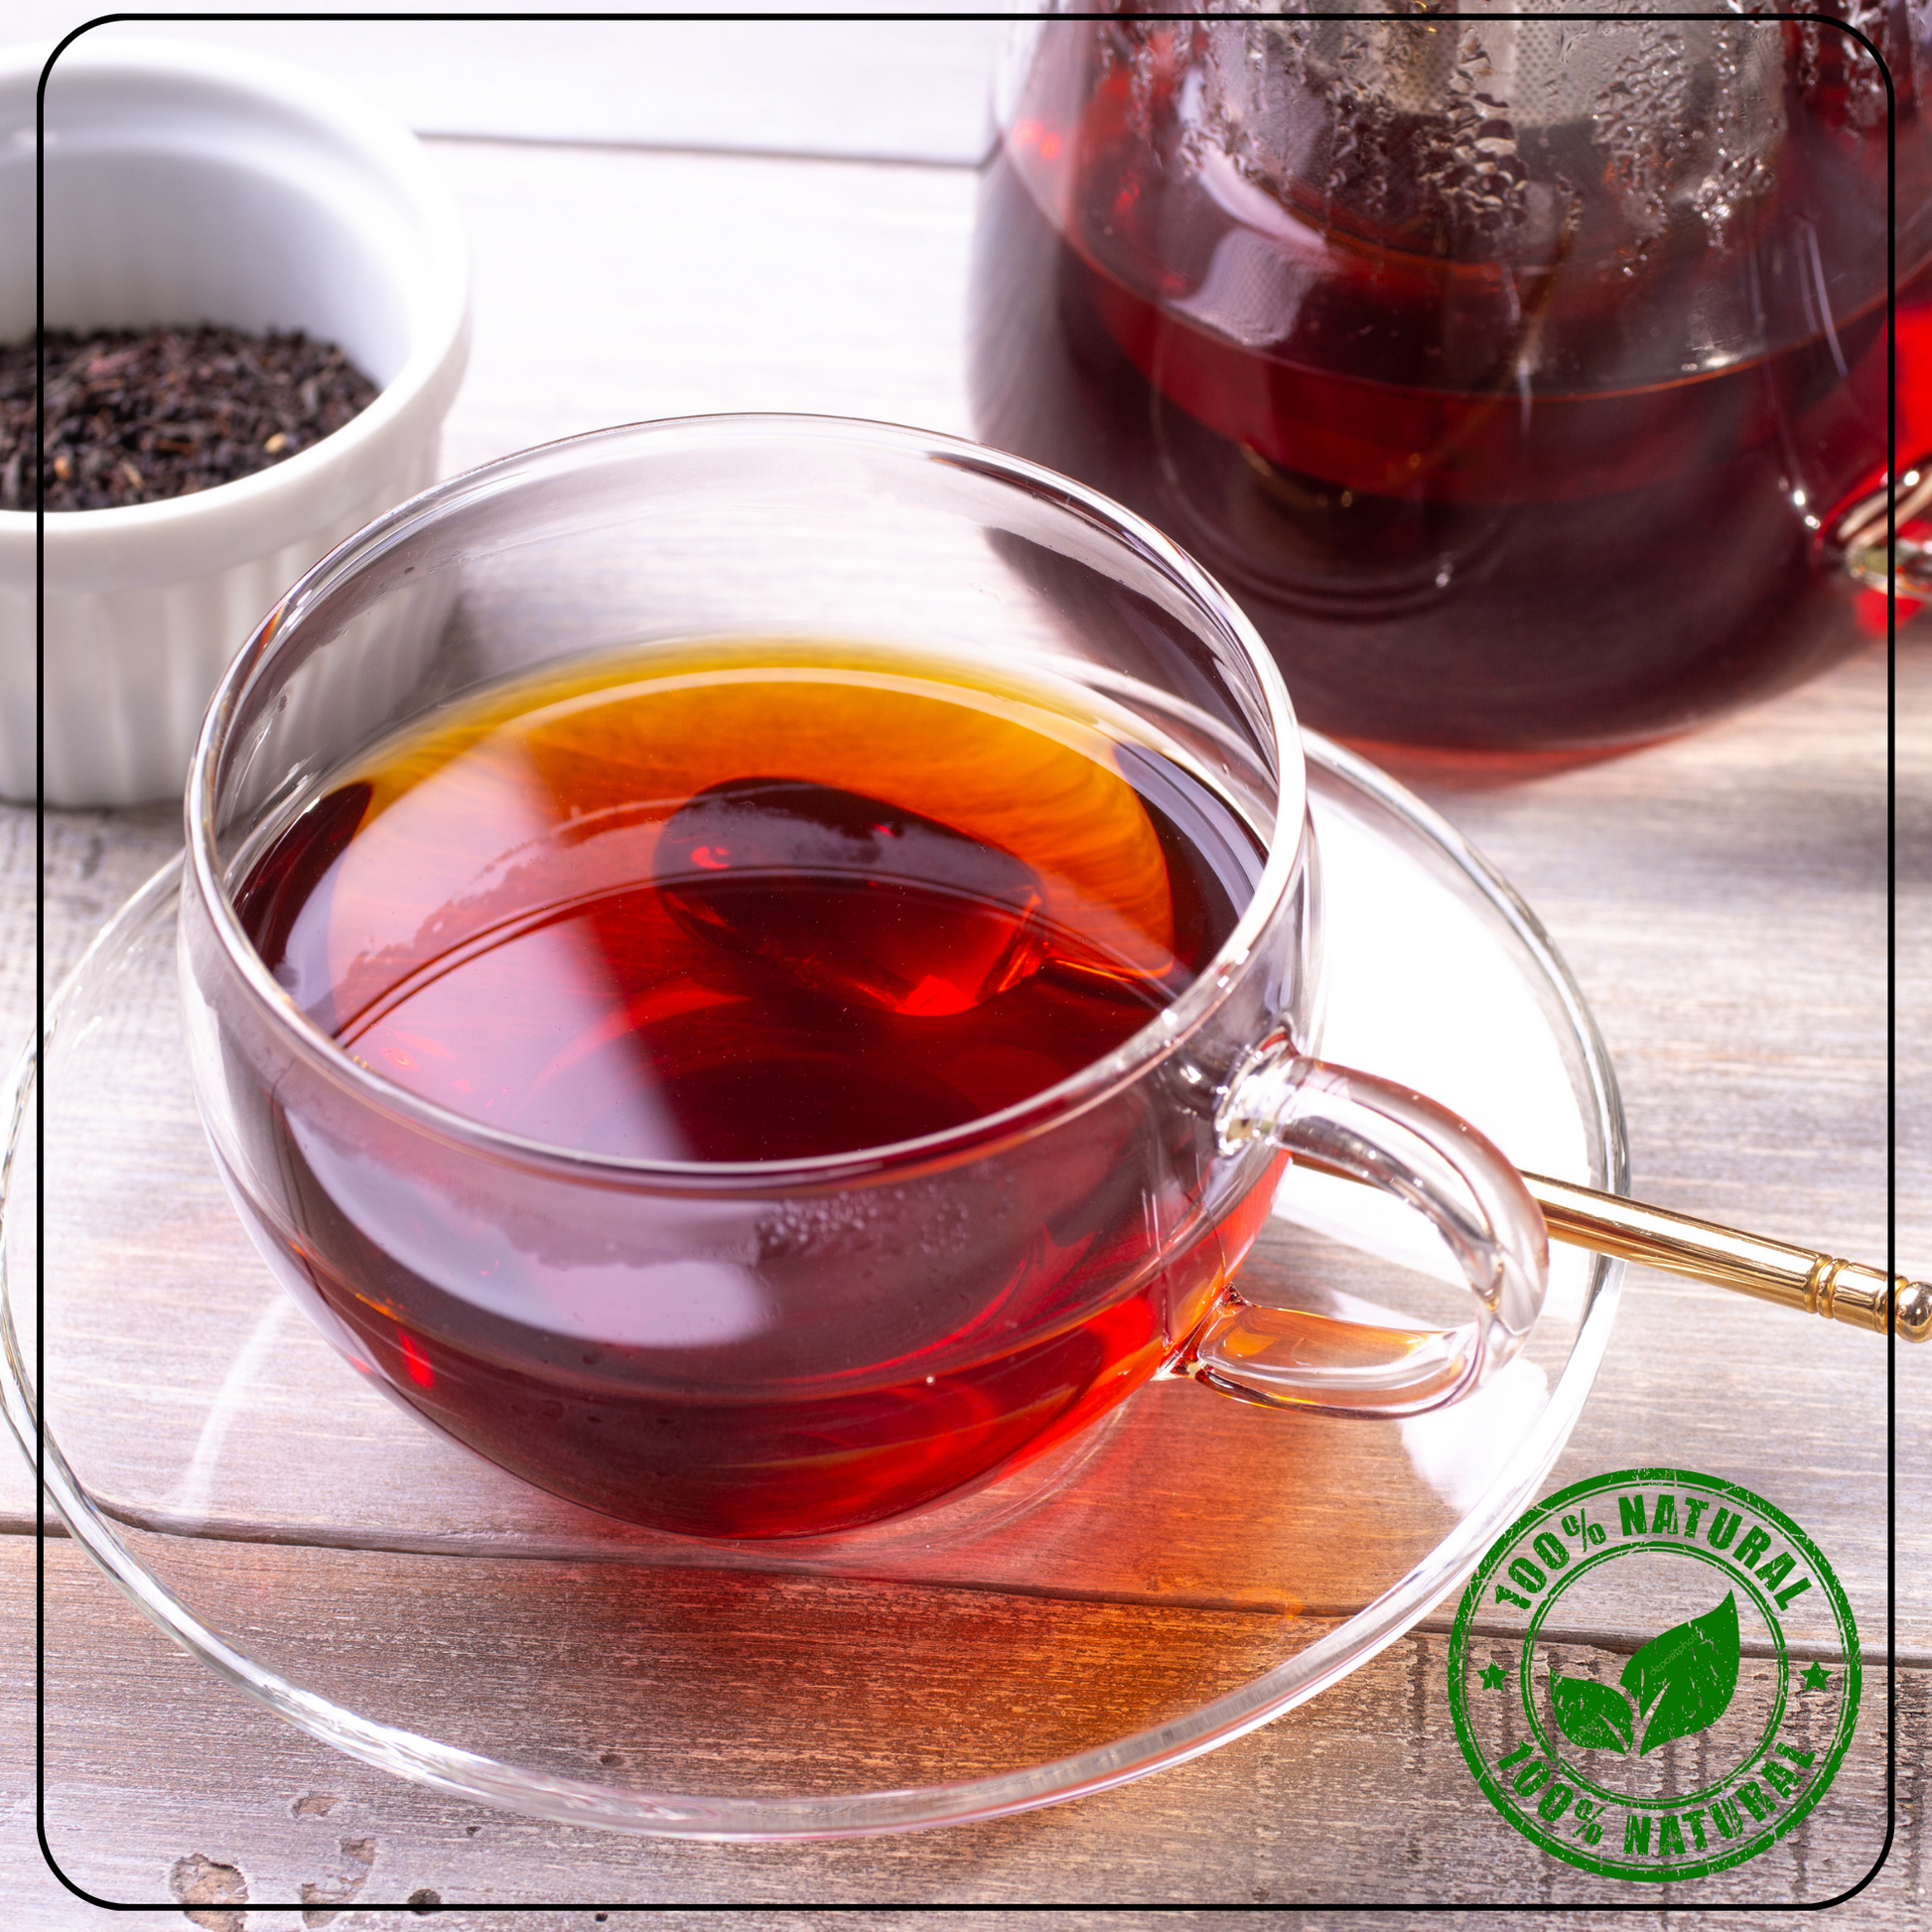 REJUVENATING Lanka Kiwi Tea - A Tropical Delight with Antioxidants and Vitamin C - Radhikas Fine Teas and Whatnots